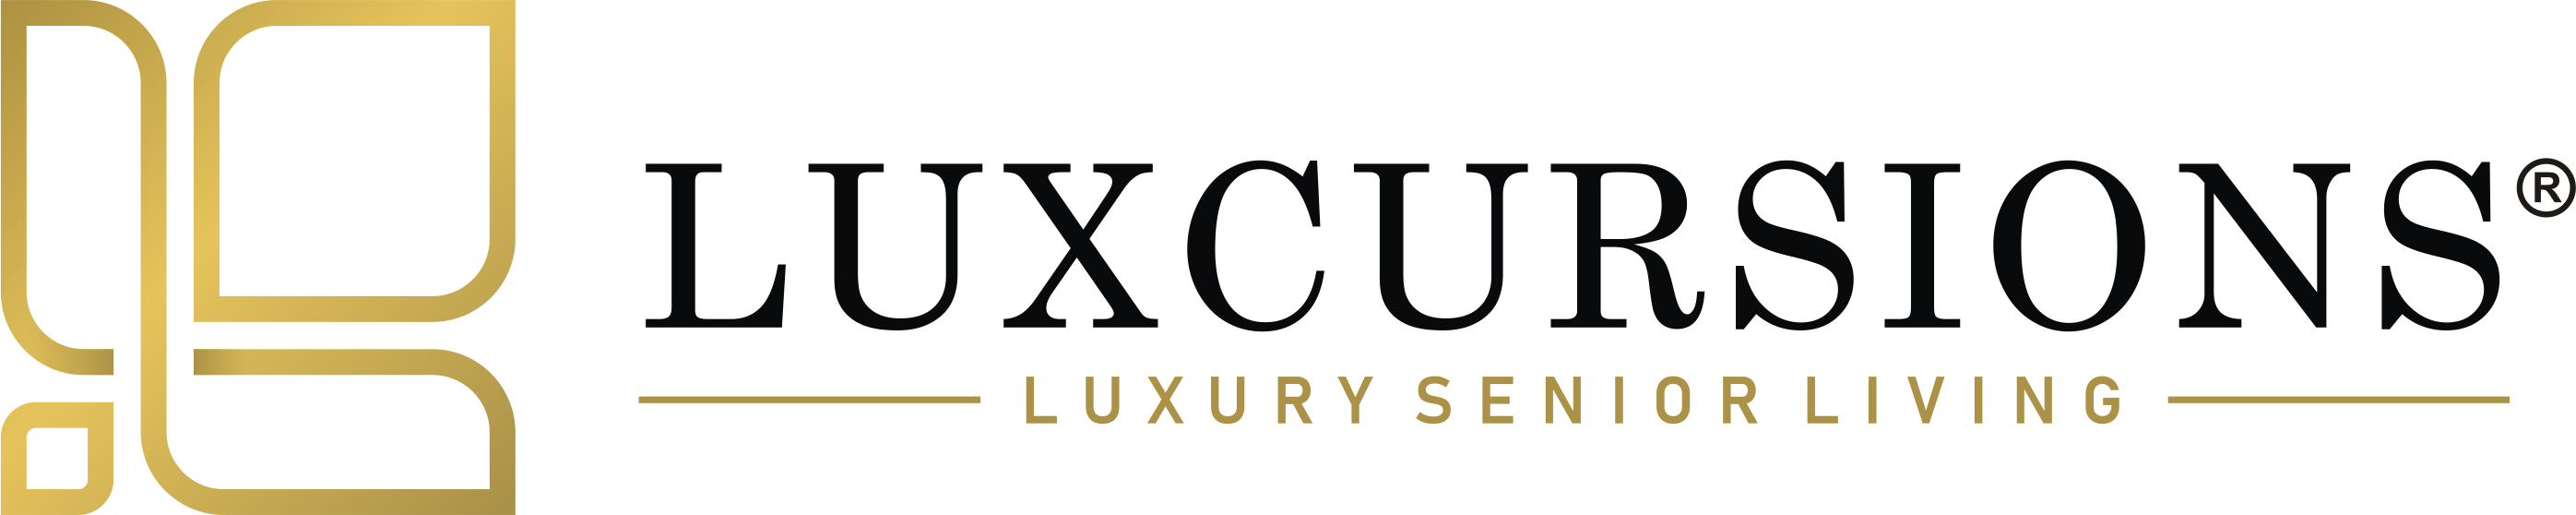 Luxcursions Logo